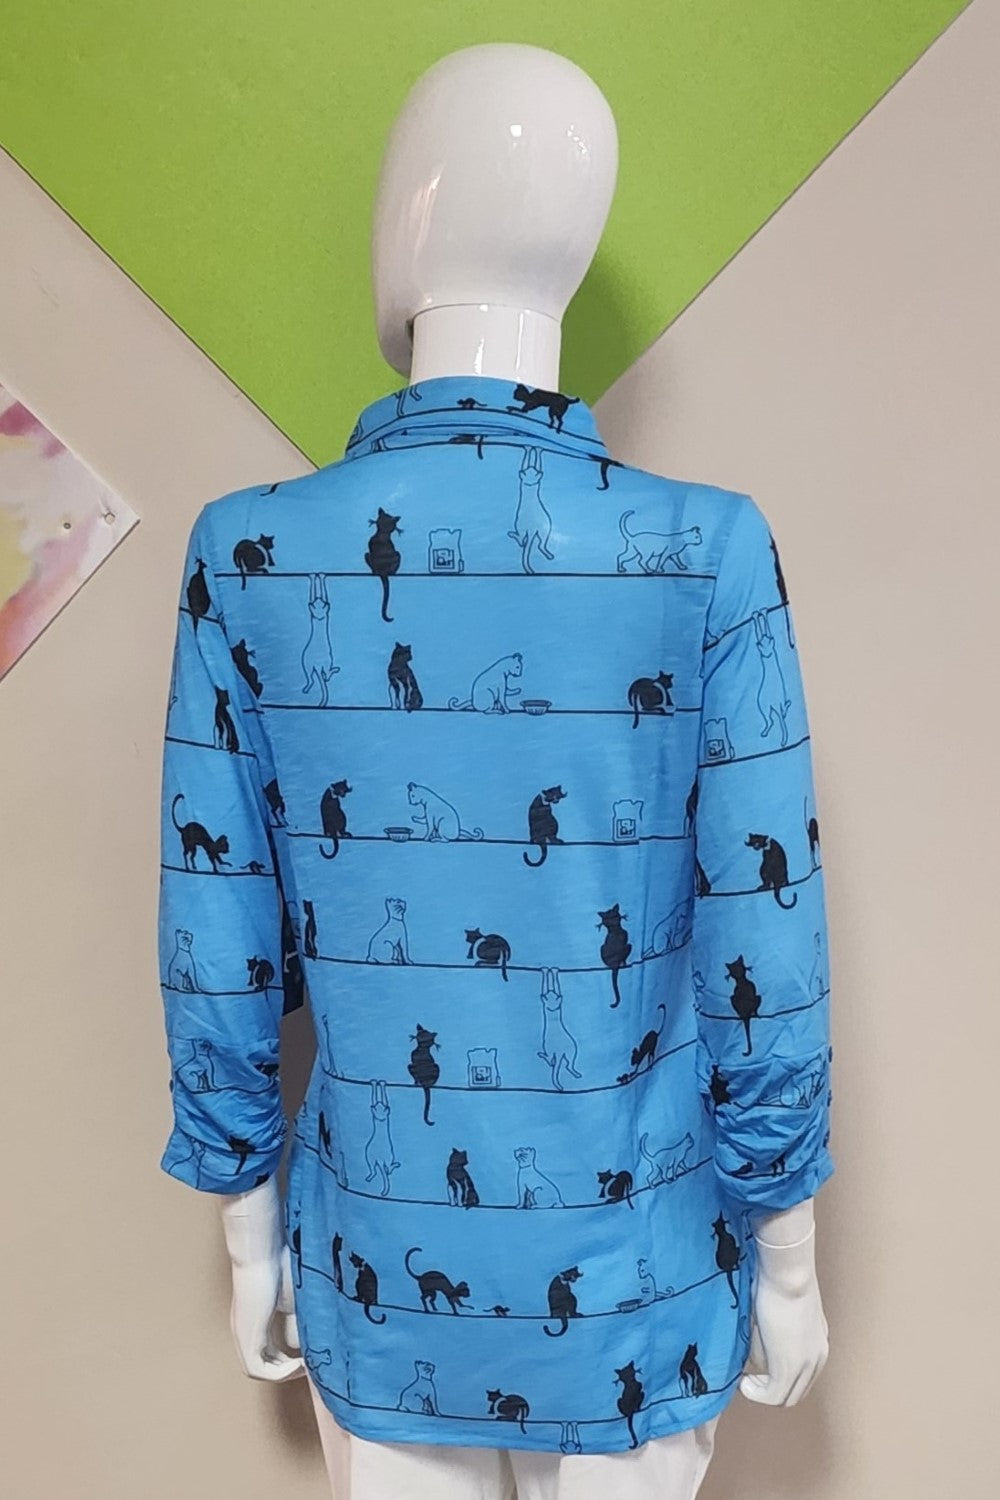 Nueva blusa de etiqueta 88849-blu azul